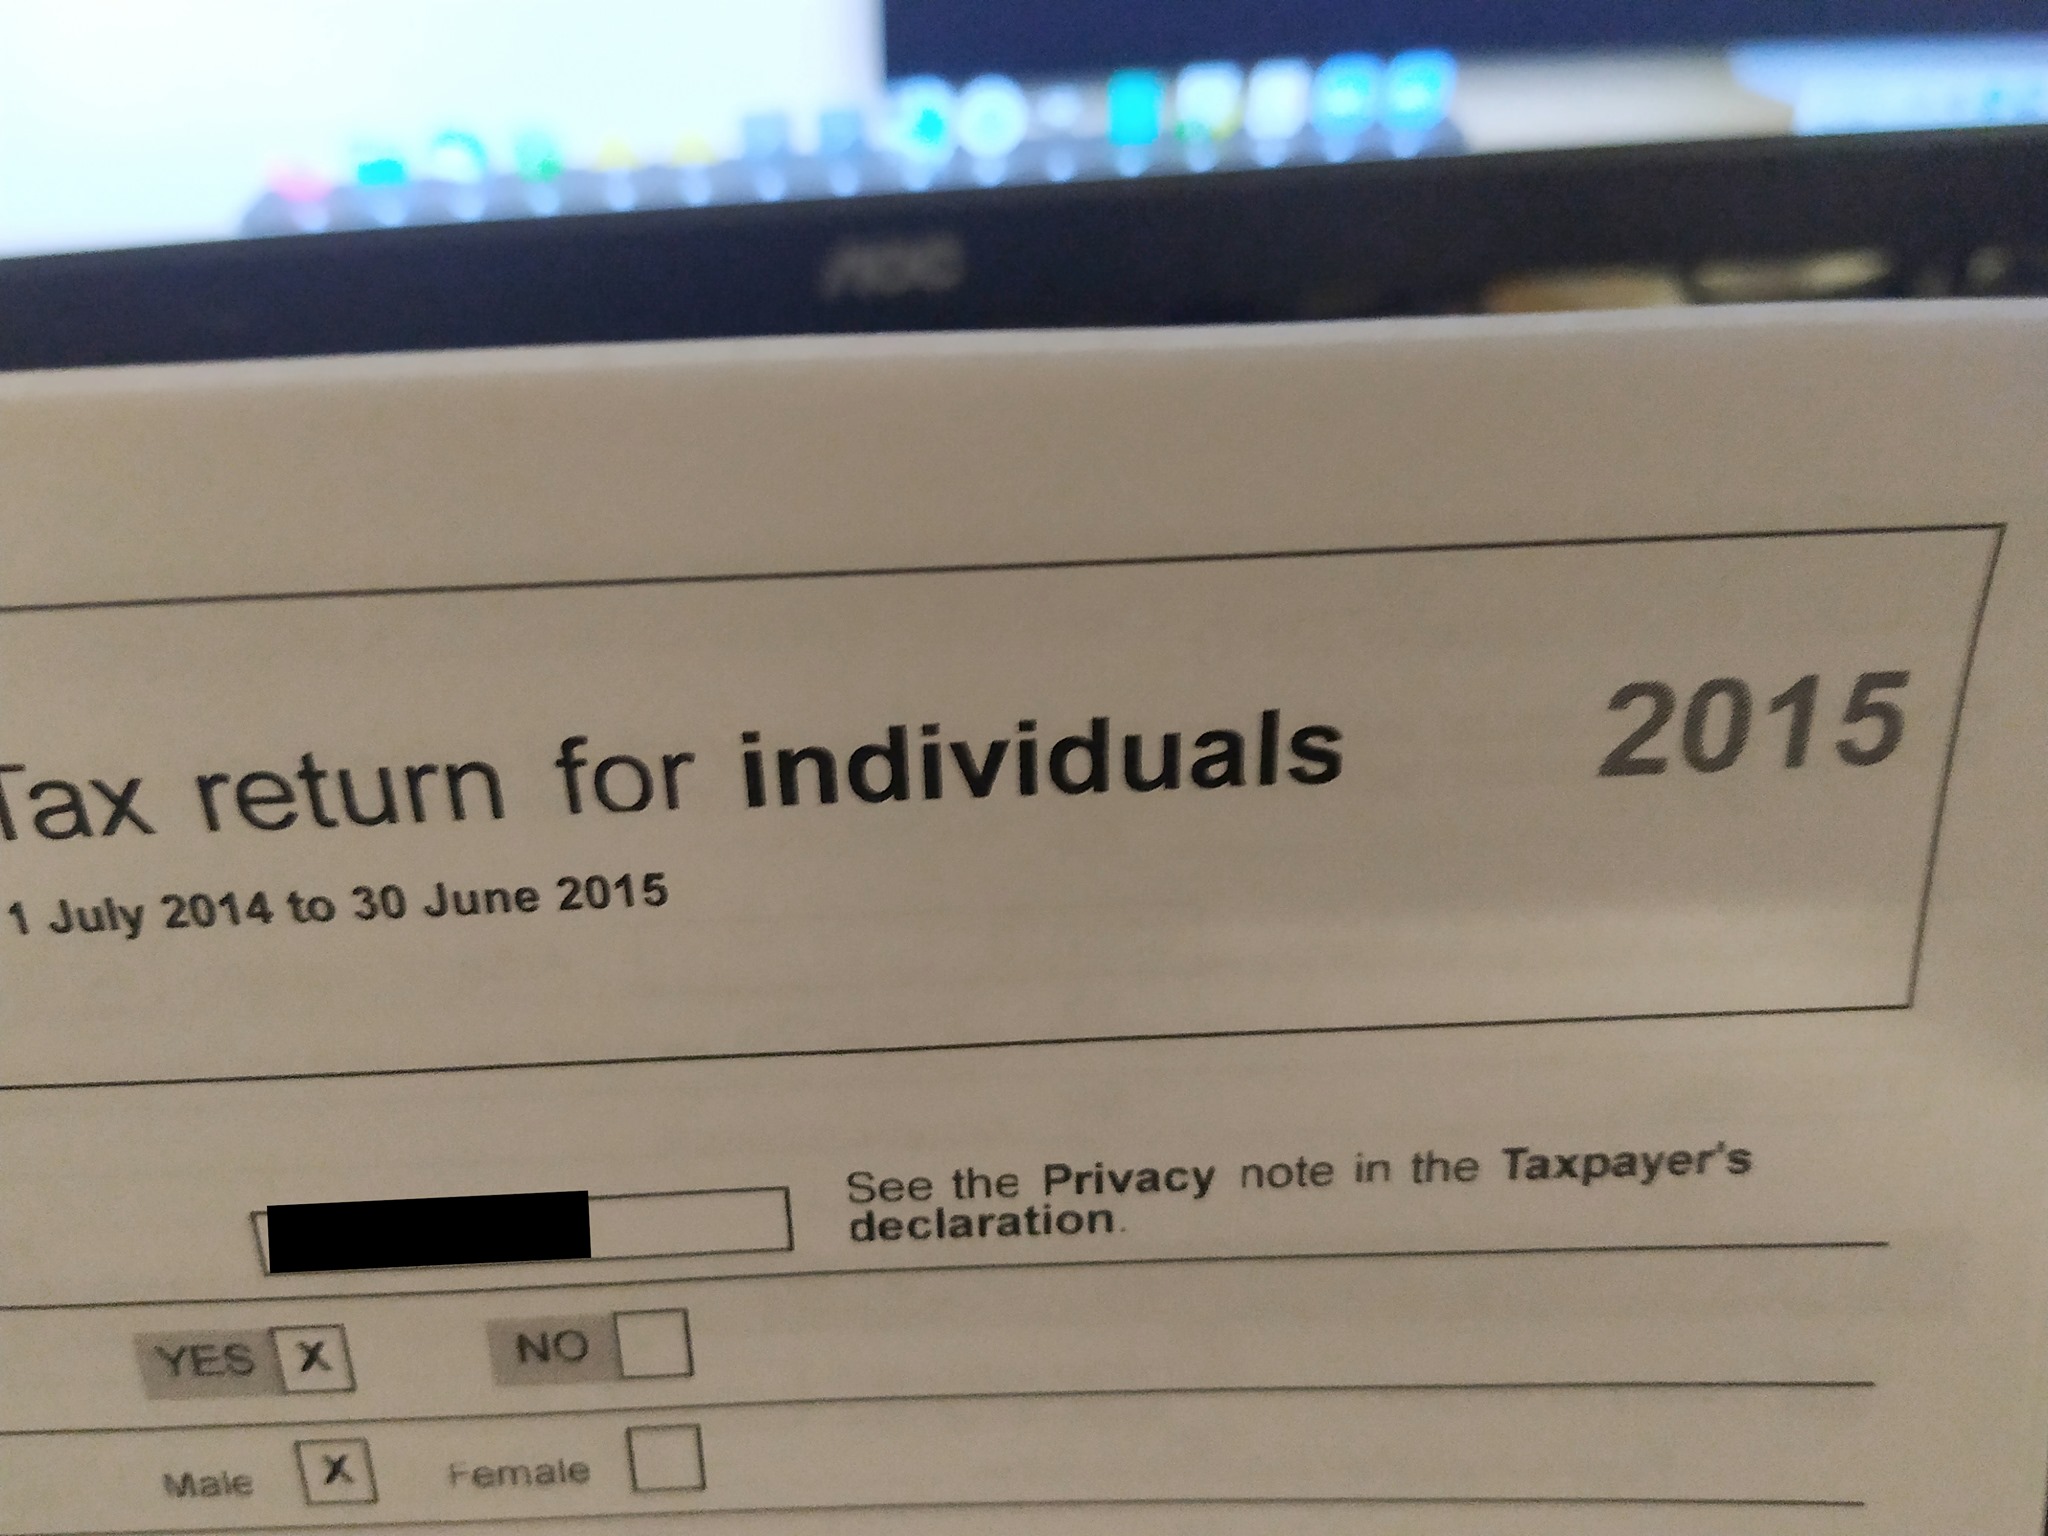 Tax return printed